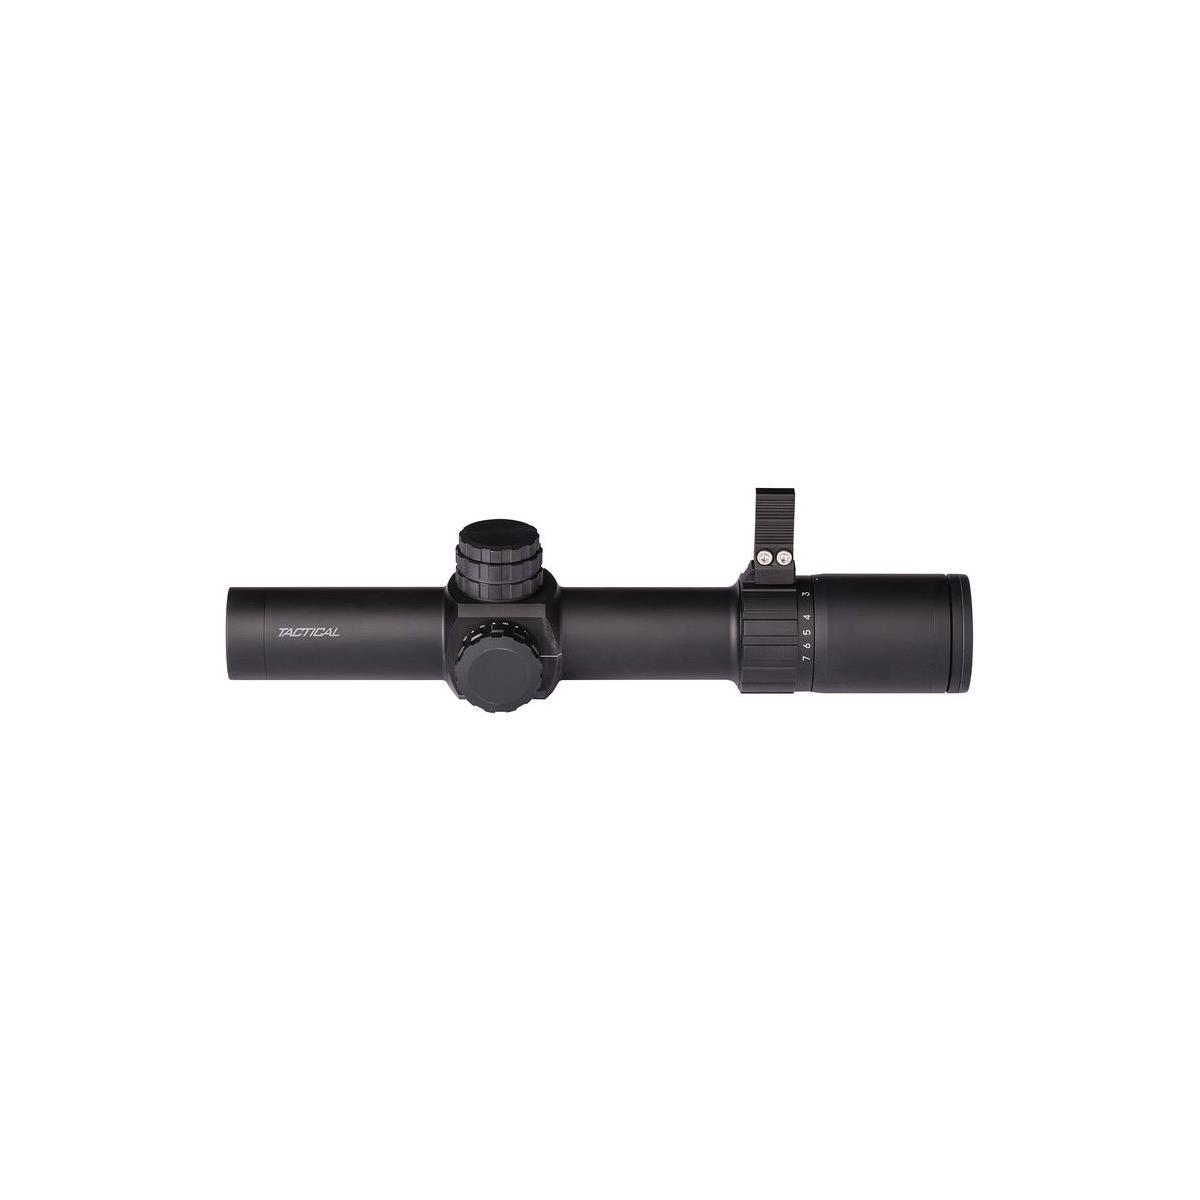 Image of Weaver 1-7x24 Tactical Riflescope